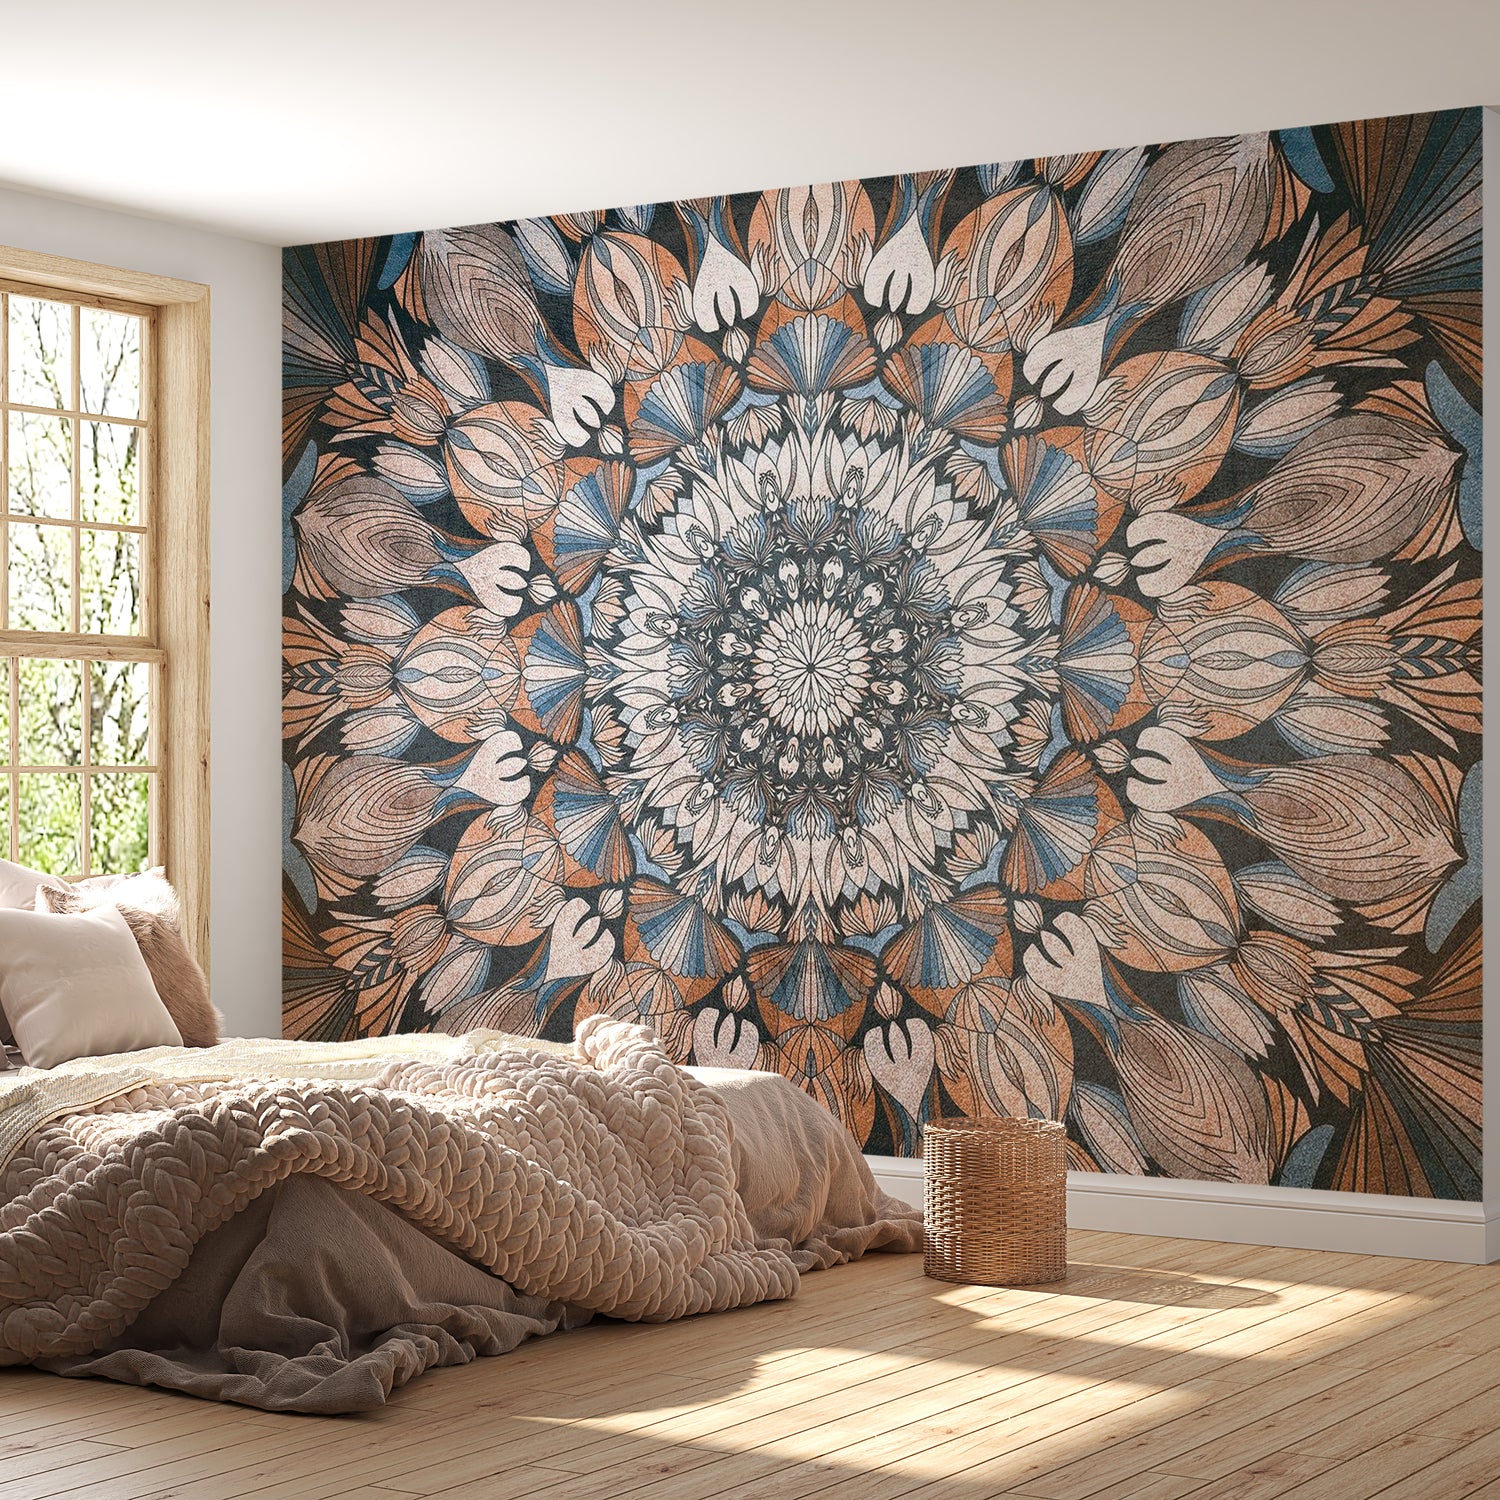 Peel & Stick Mandala Wall Mural - Boho Geometric Mandala - Removable Wall Decals